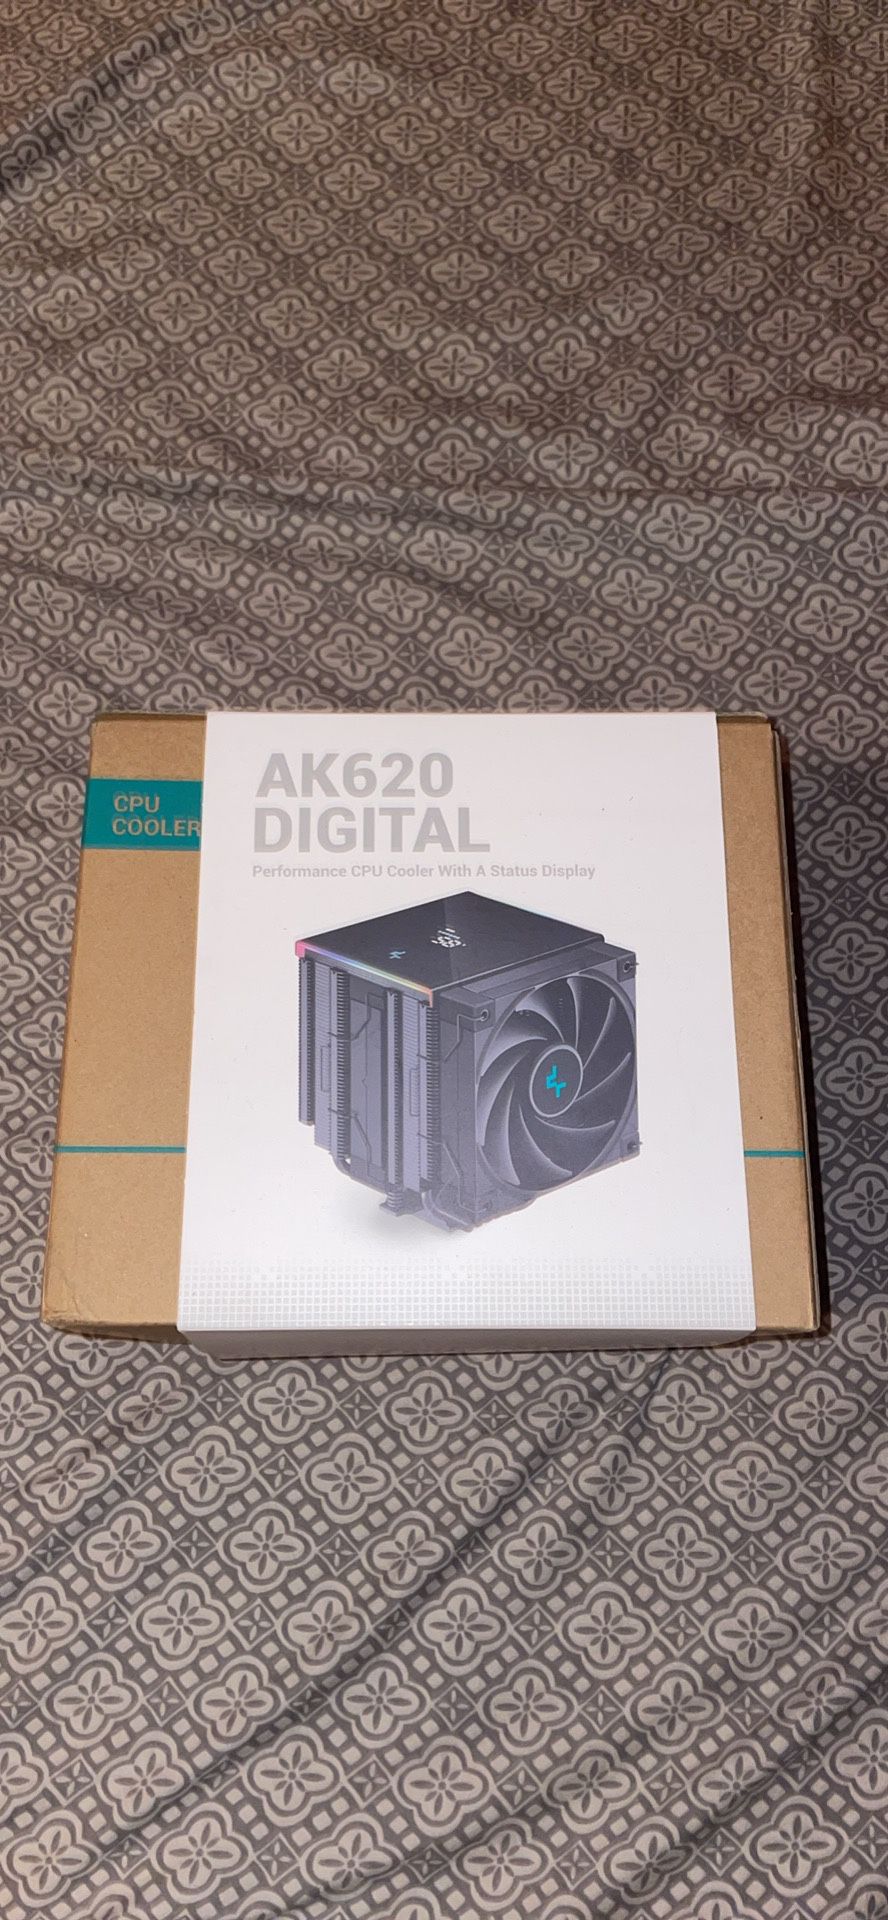 AK620 Digital CPU Cooler